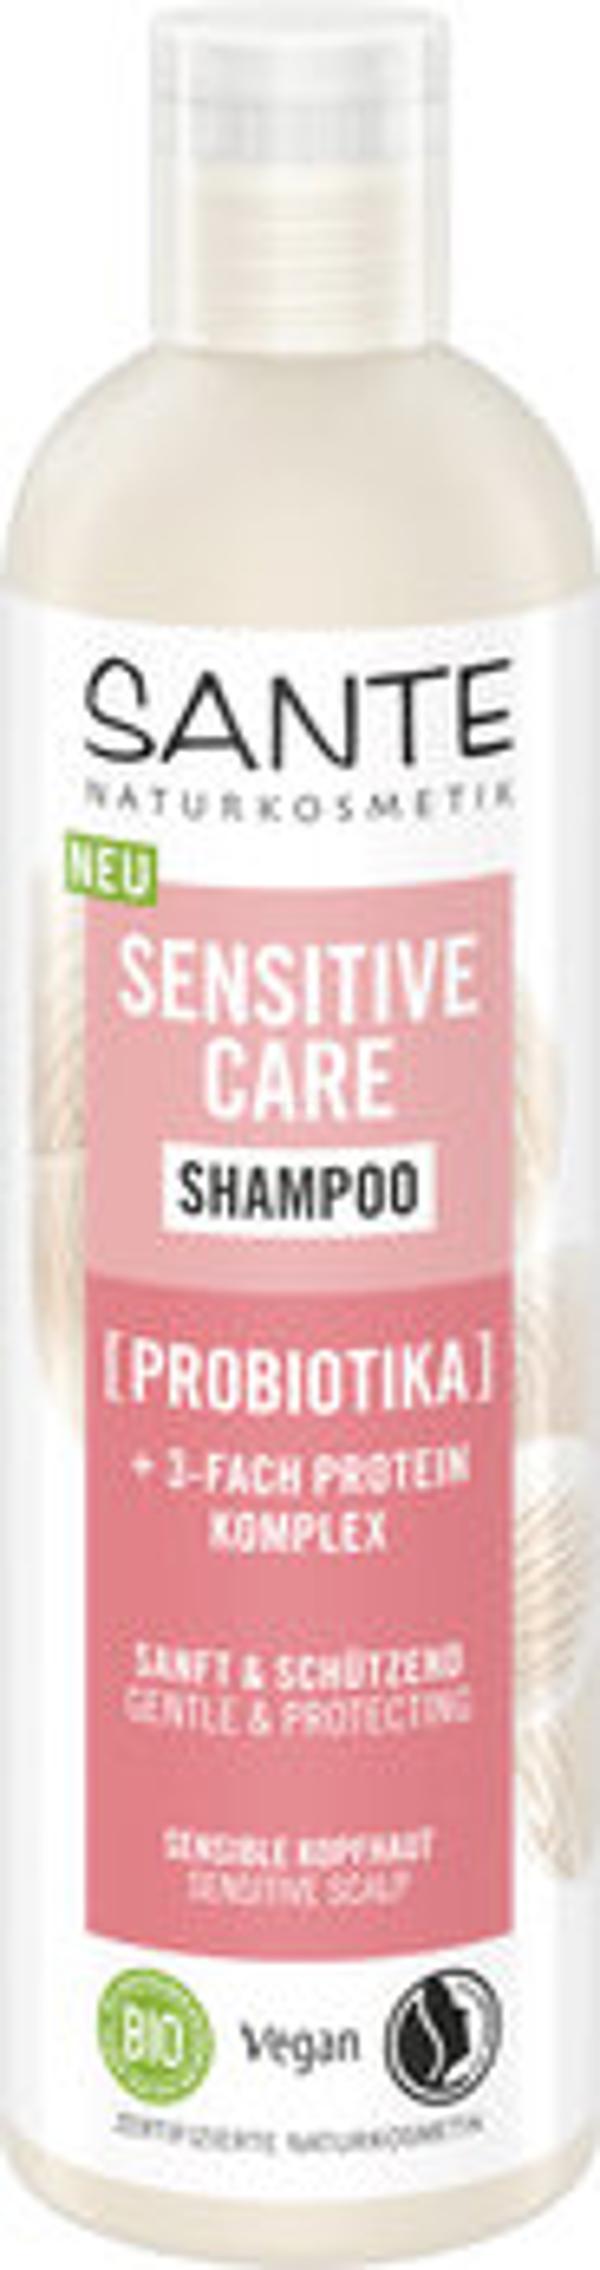 Produktfoto zu Sensitive Care Shampoo Probiotika 250ml